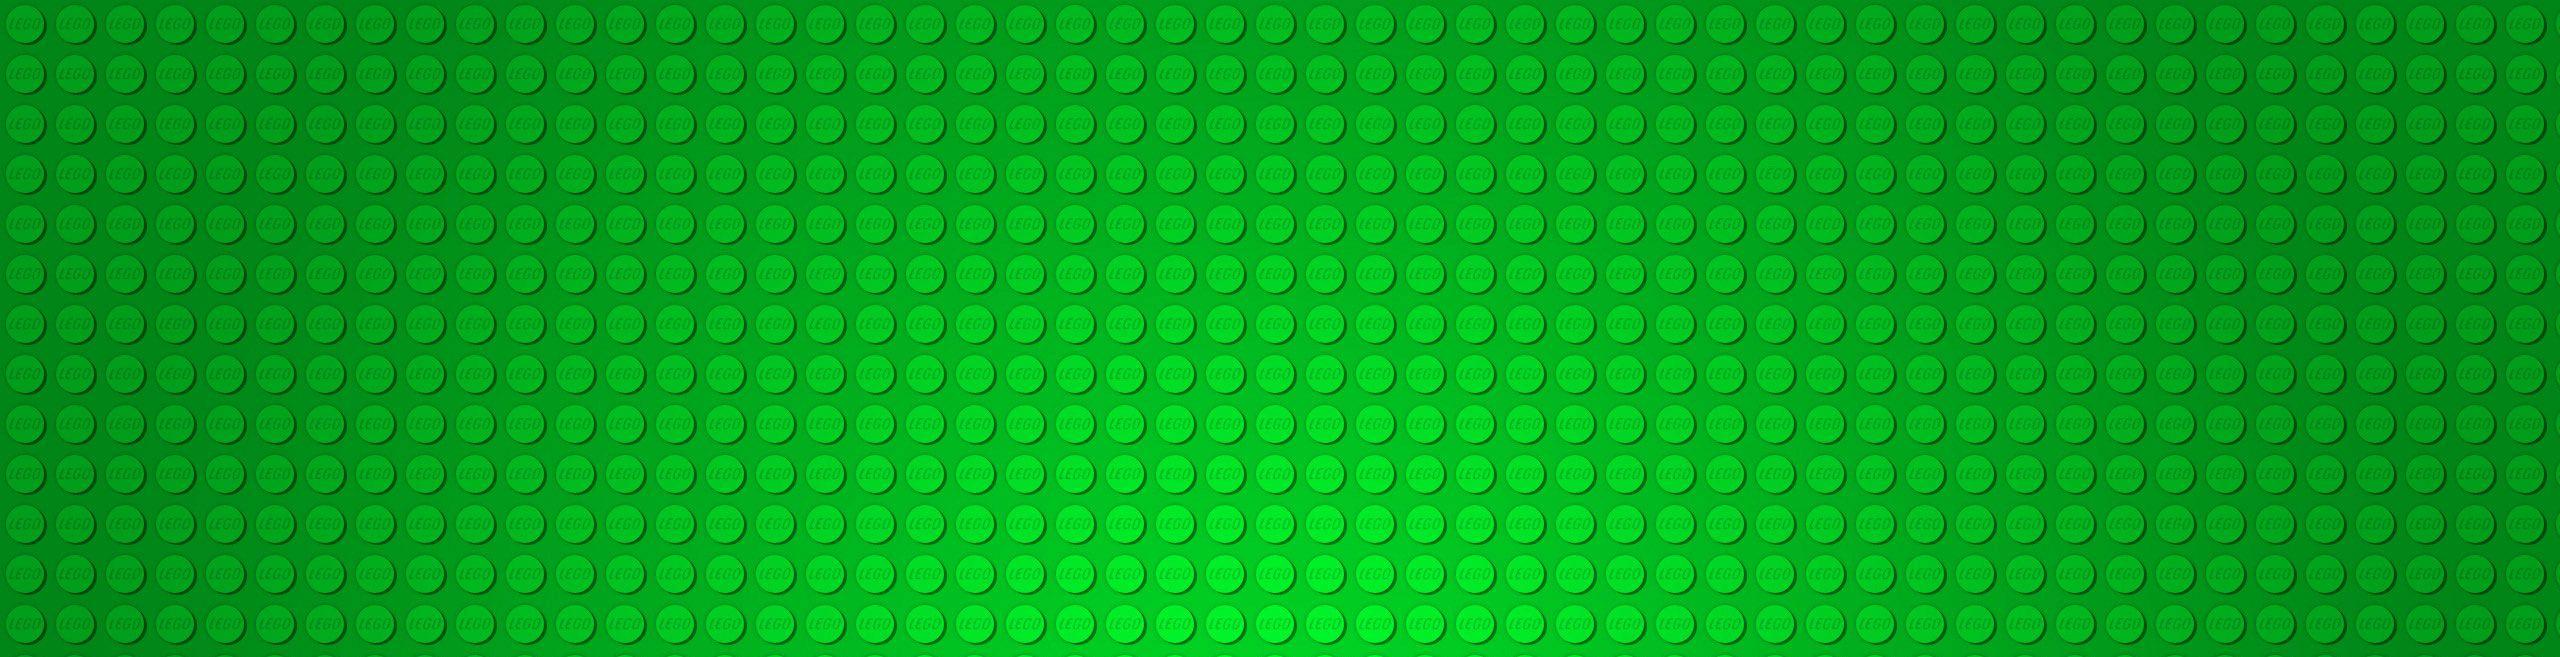 Green Lego Background